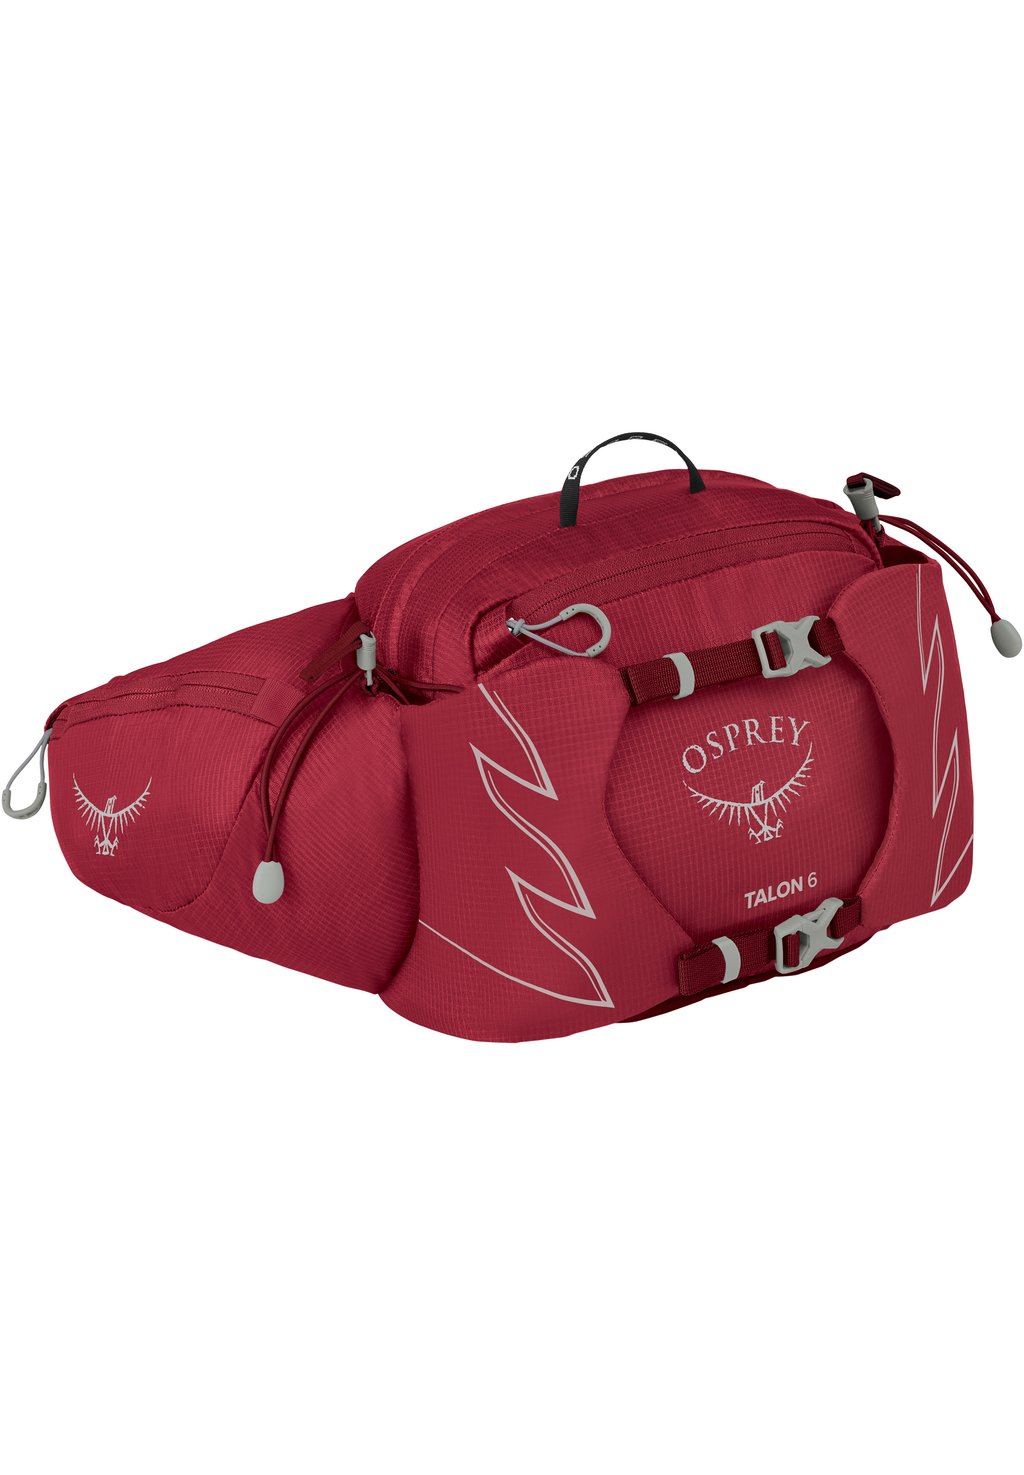 Поясная сумка TALON Osprey, цвет cosmic red